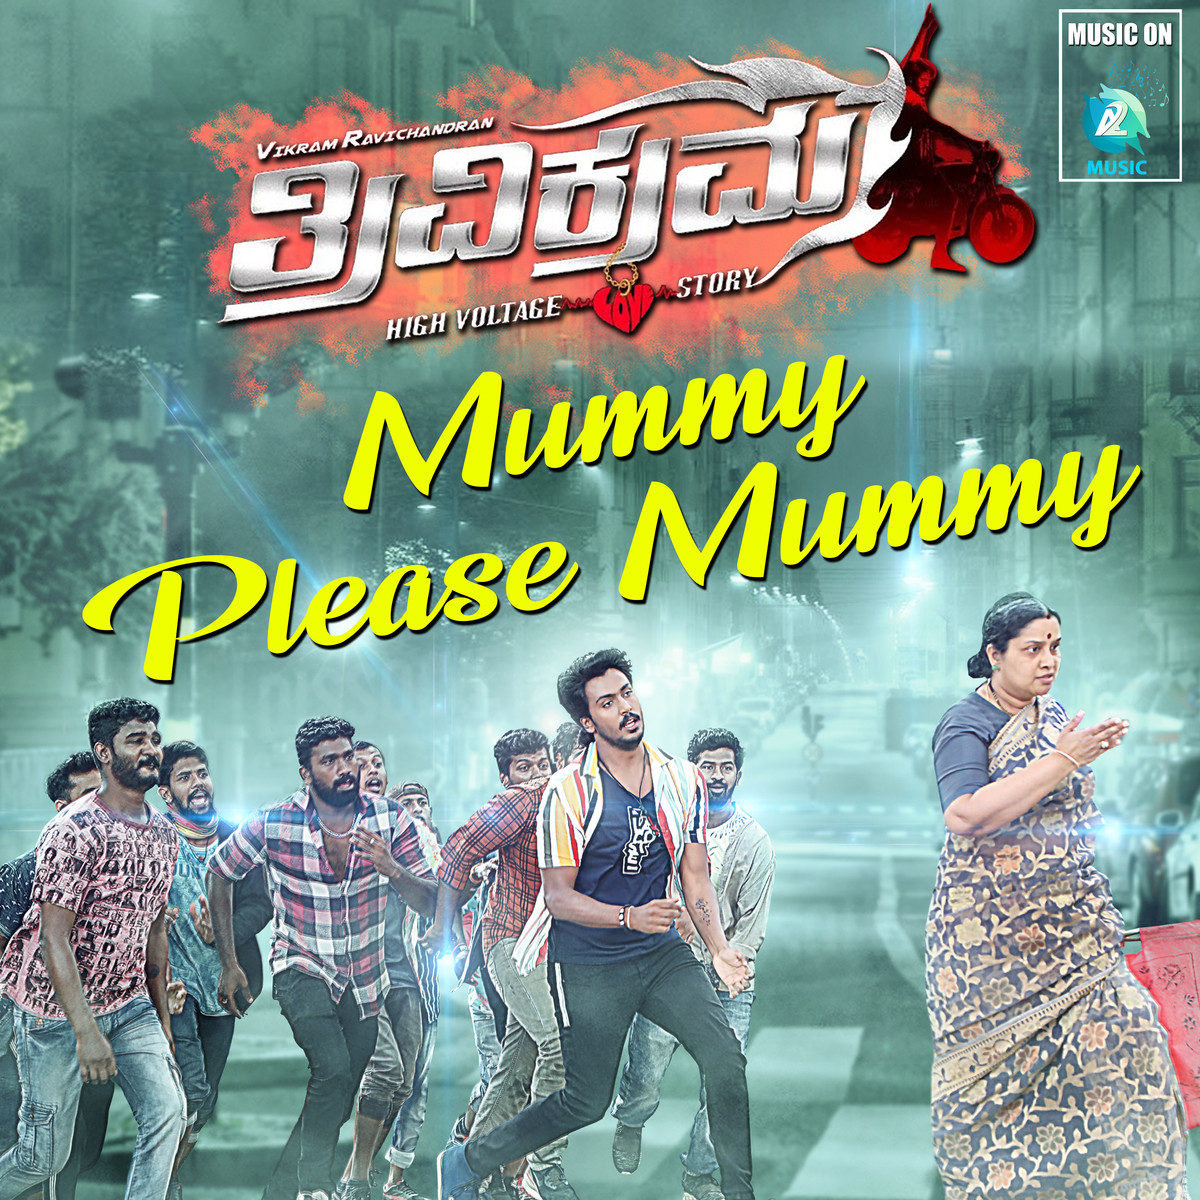 Mummy Please Mummy From Trivikrama Song Download Mummy Please Mummy From Trivikrama Mp3 Kannada Song Online Free On Gaana Com